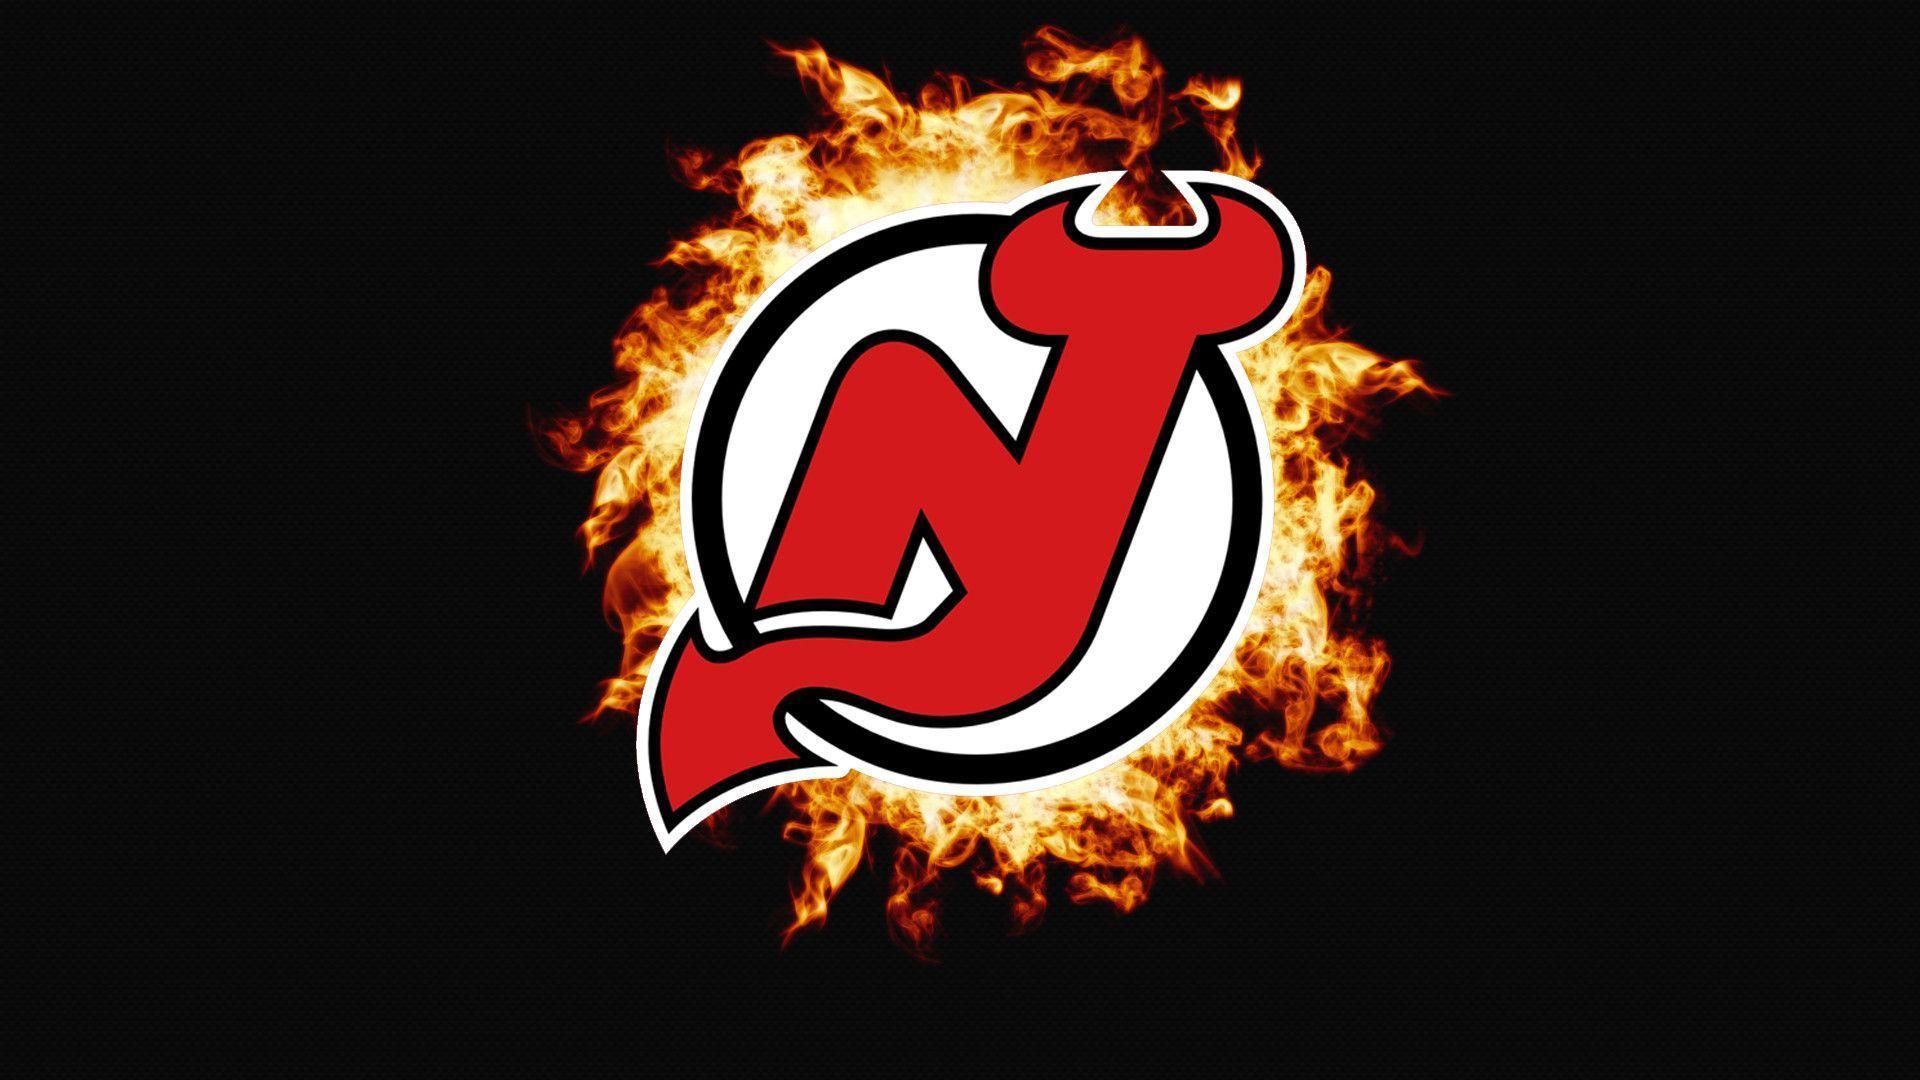 New Jersey Devils wallpaper. New Jersey Devils background